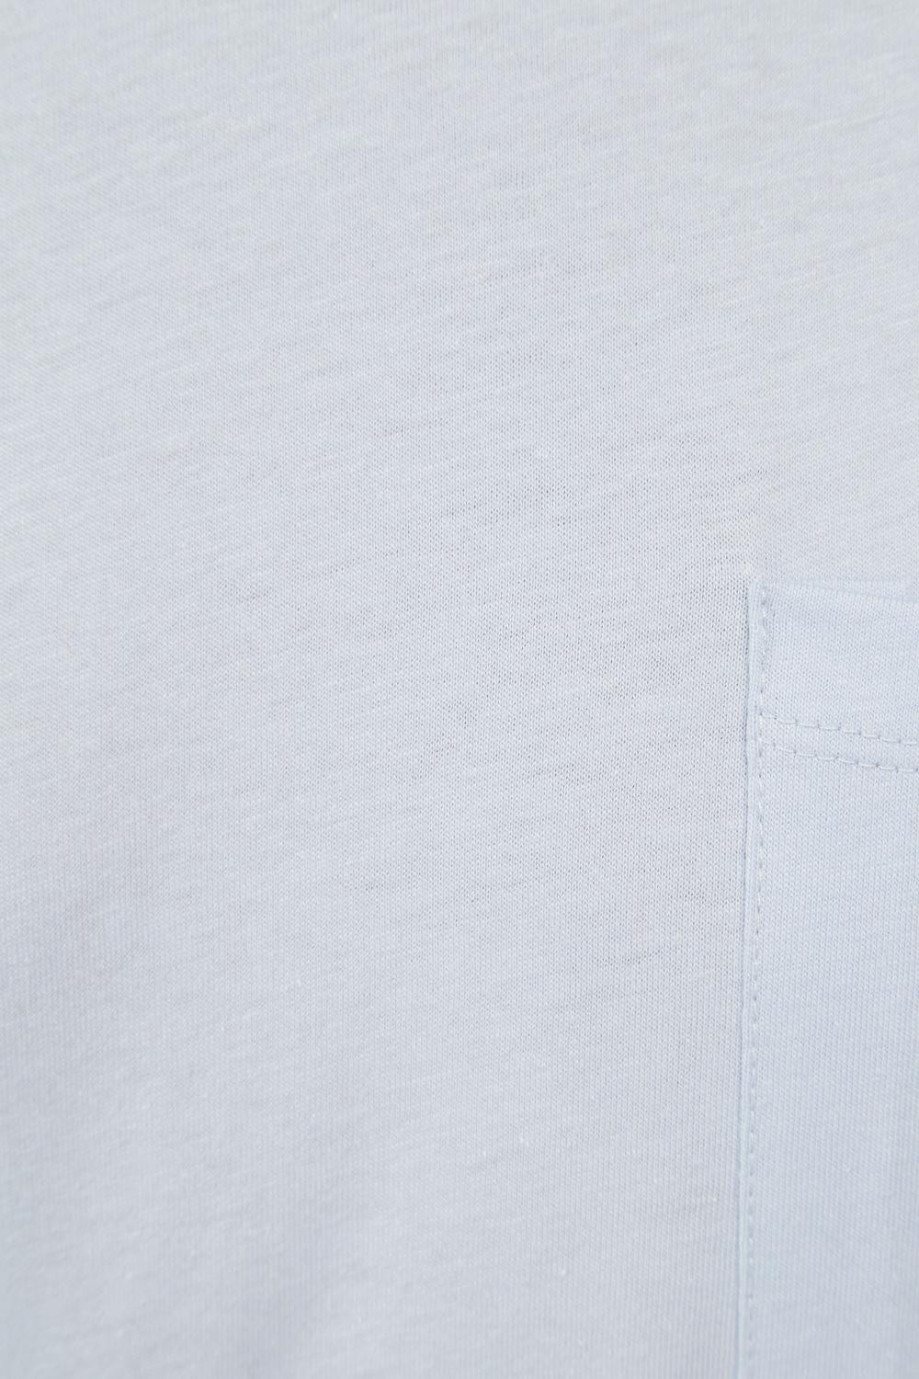 Camiseta unicolor manga corta con bolsillo de parche en frente